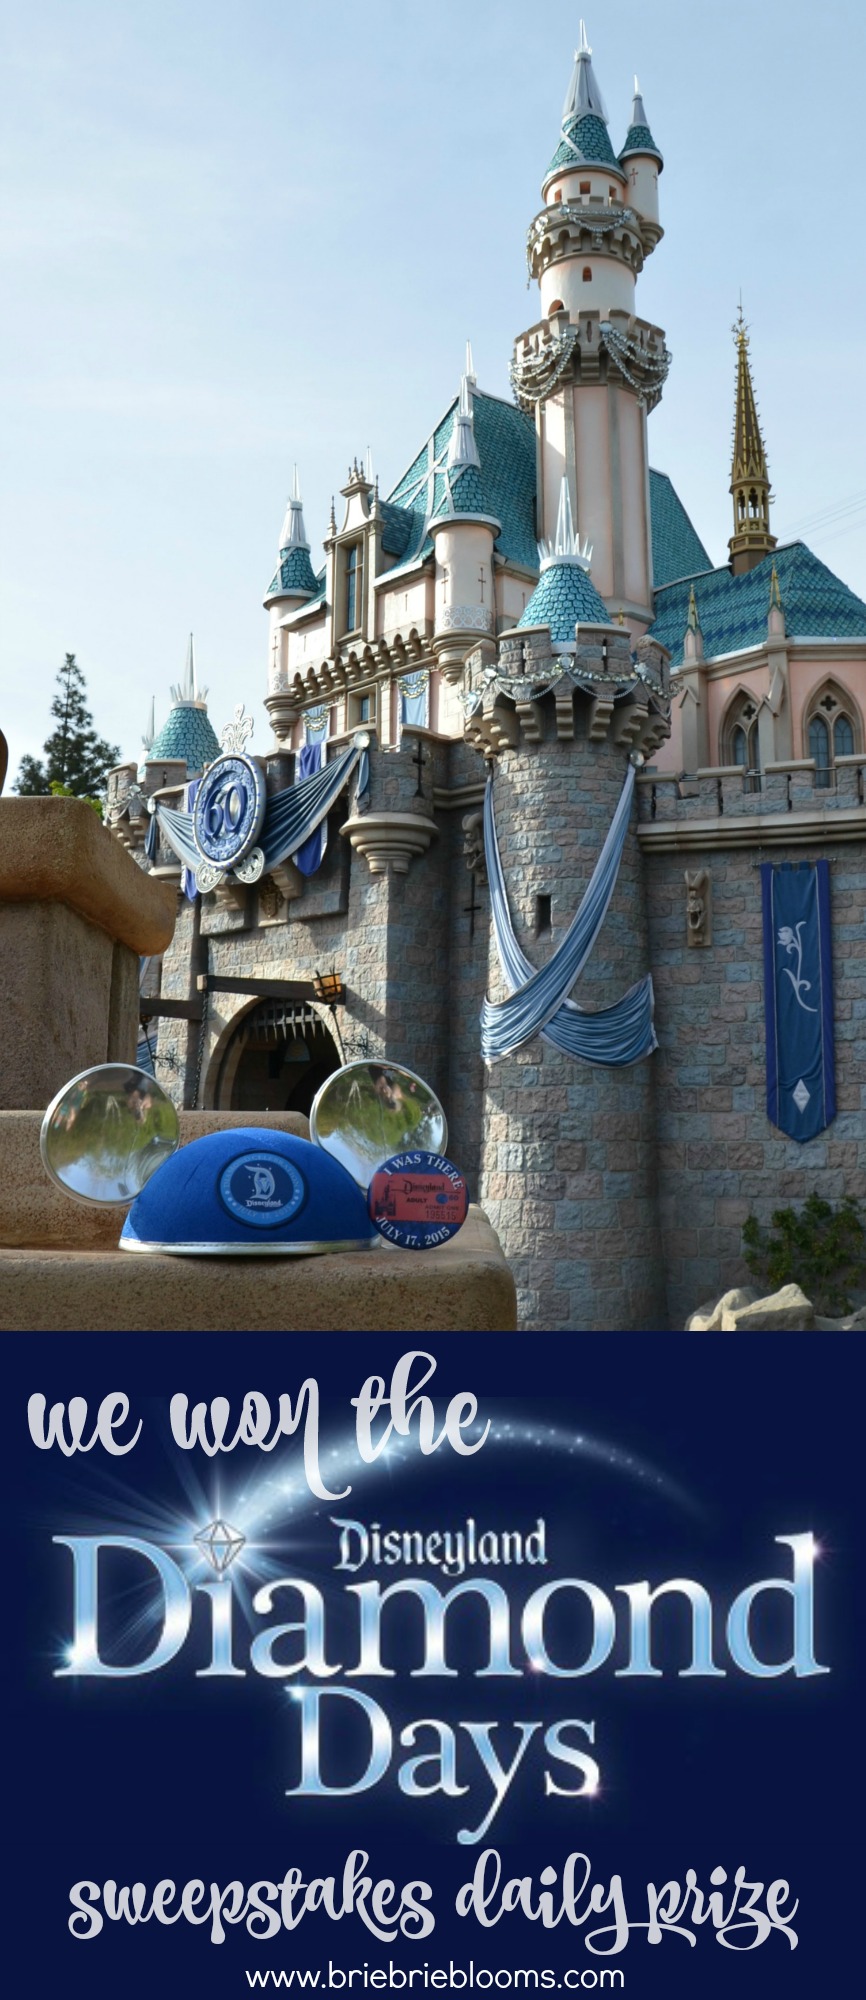 Disneyland Diamond Days Sweepstakes Winner - We won the Diamond Days Daily sweeps